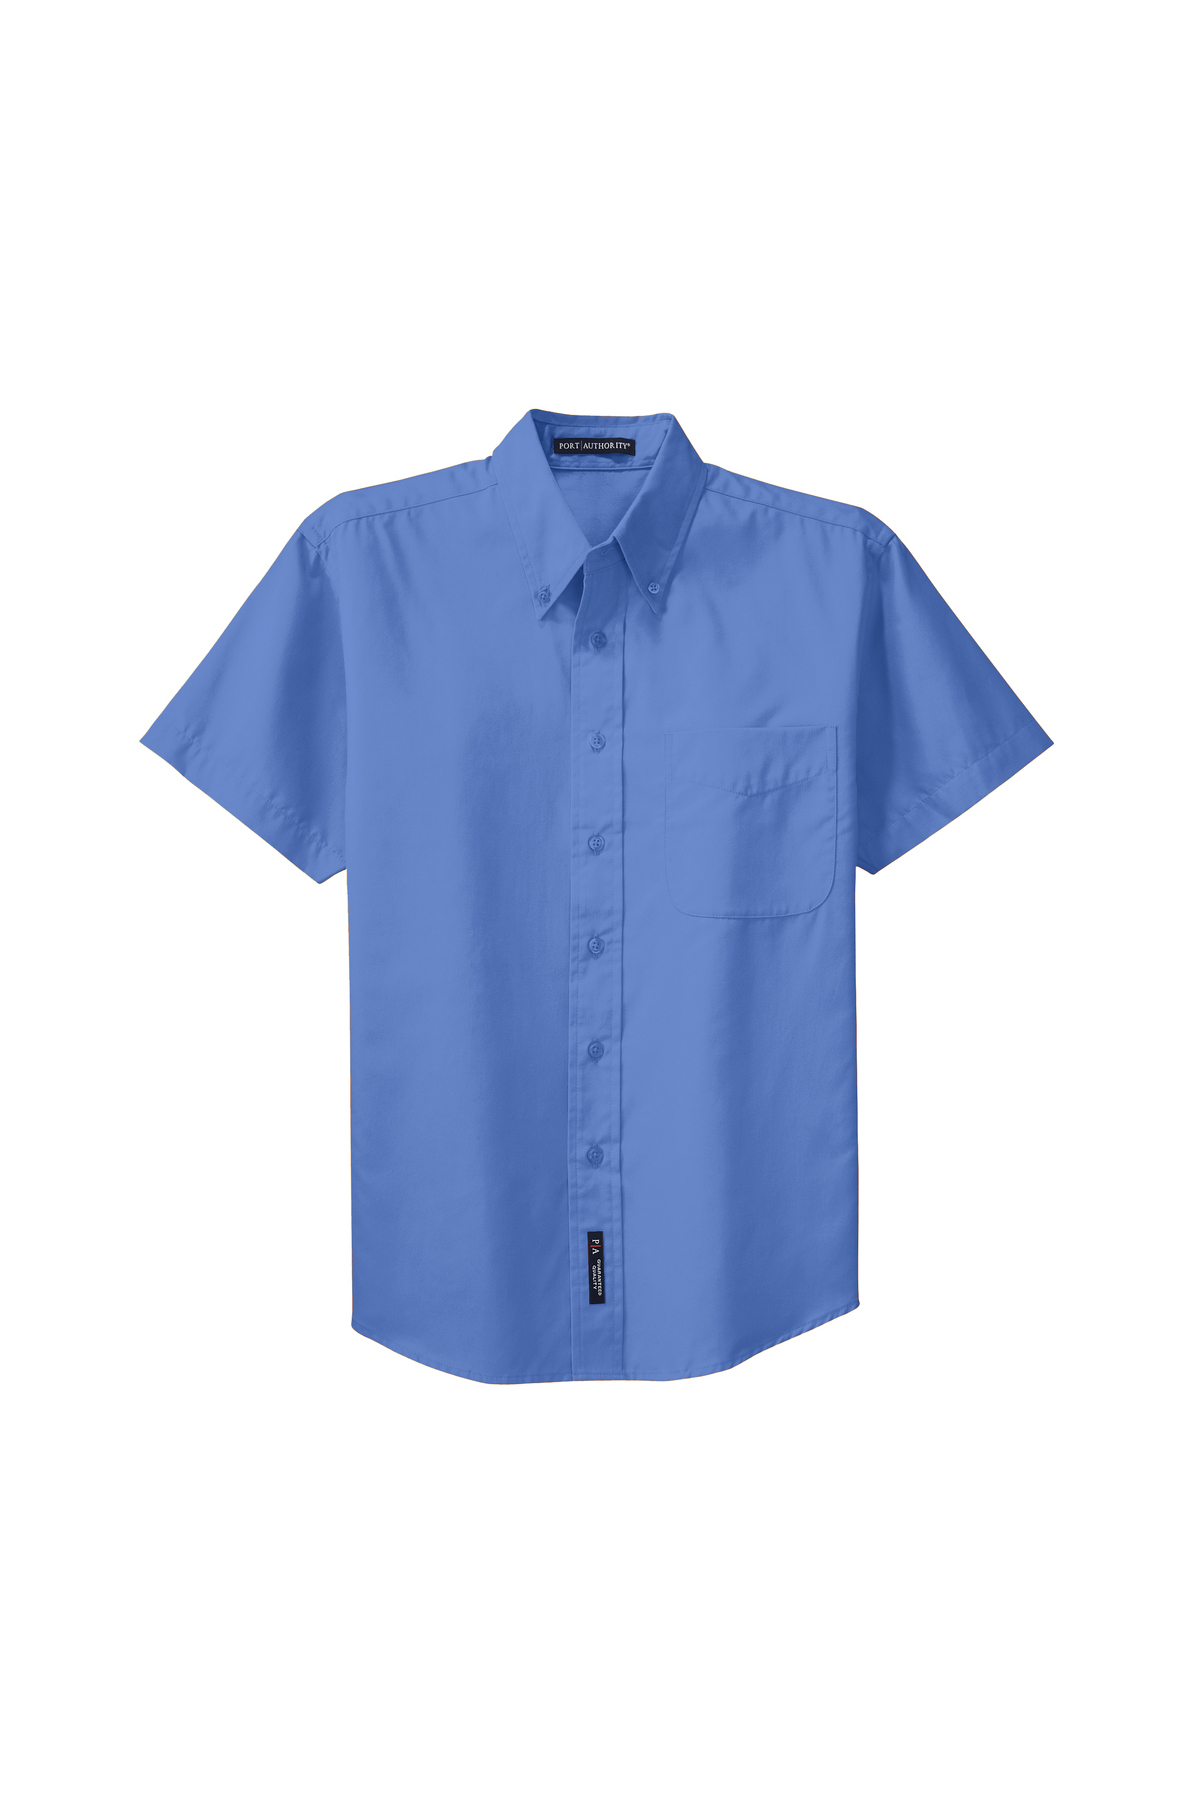 Port Authority Short Sleeve Easy Care Shirt | Product | Port Authority